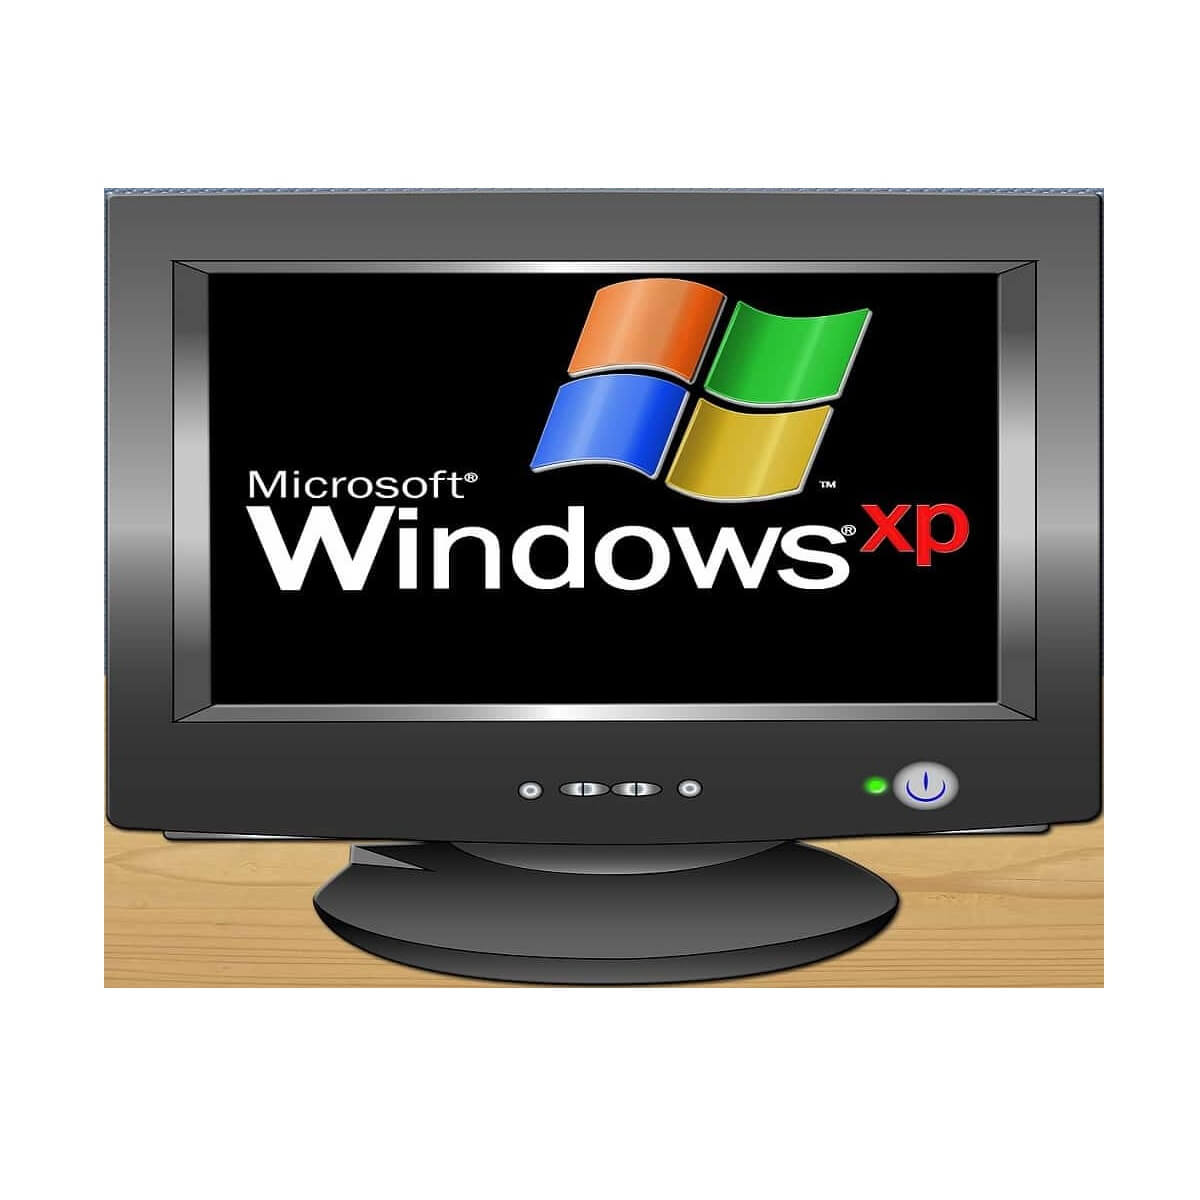 avg antivirus 2013 free download for windows xp